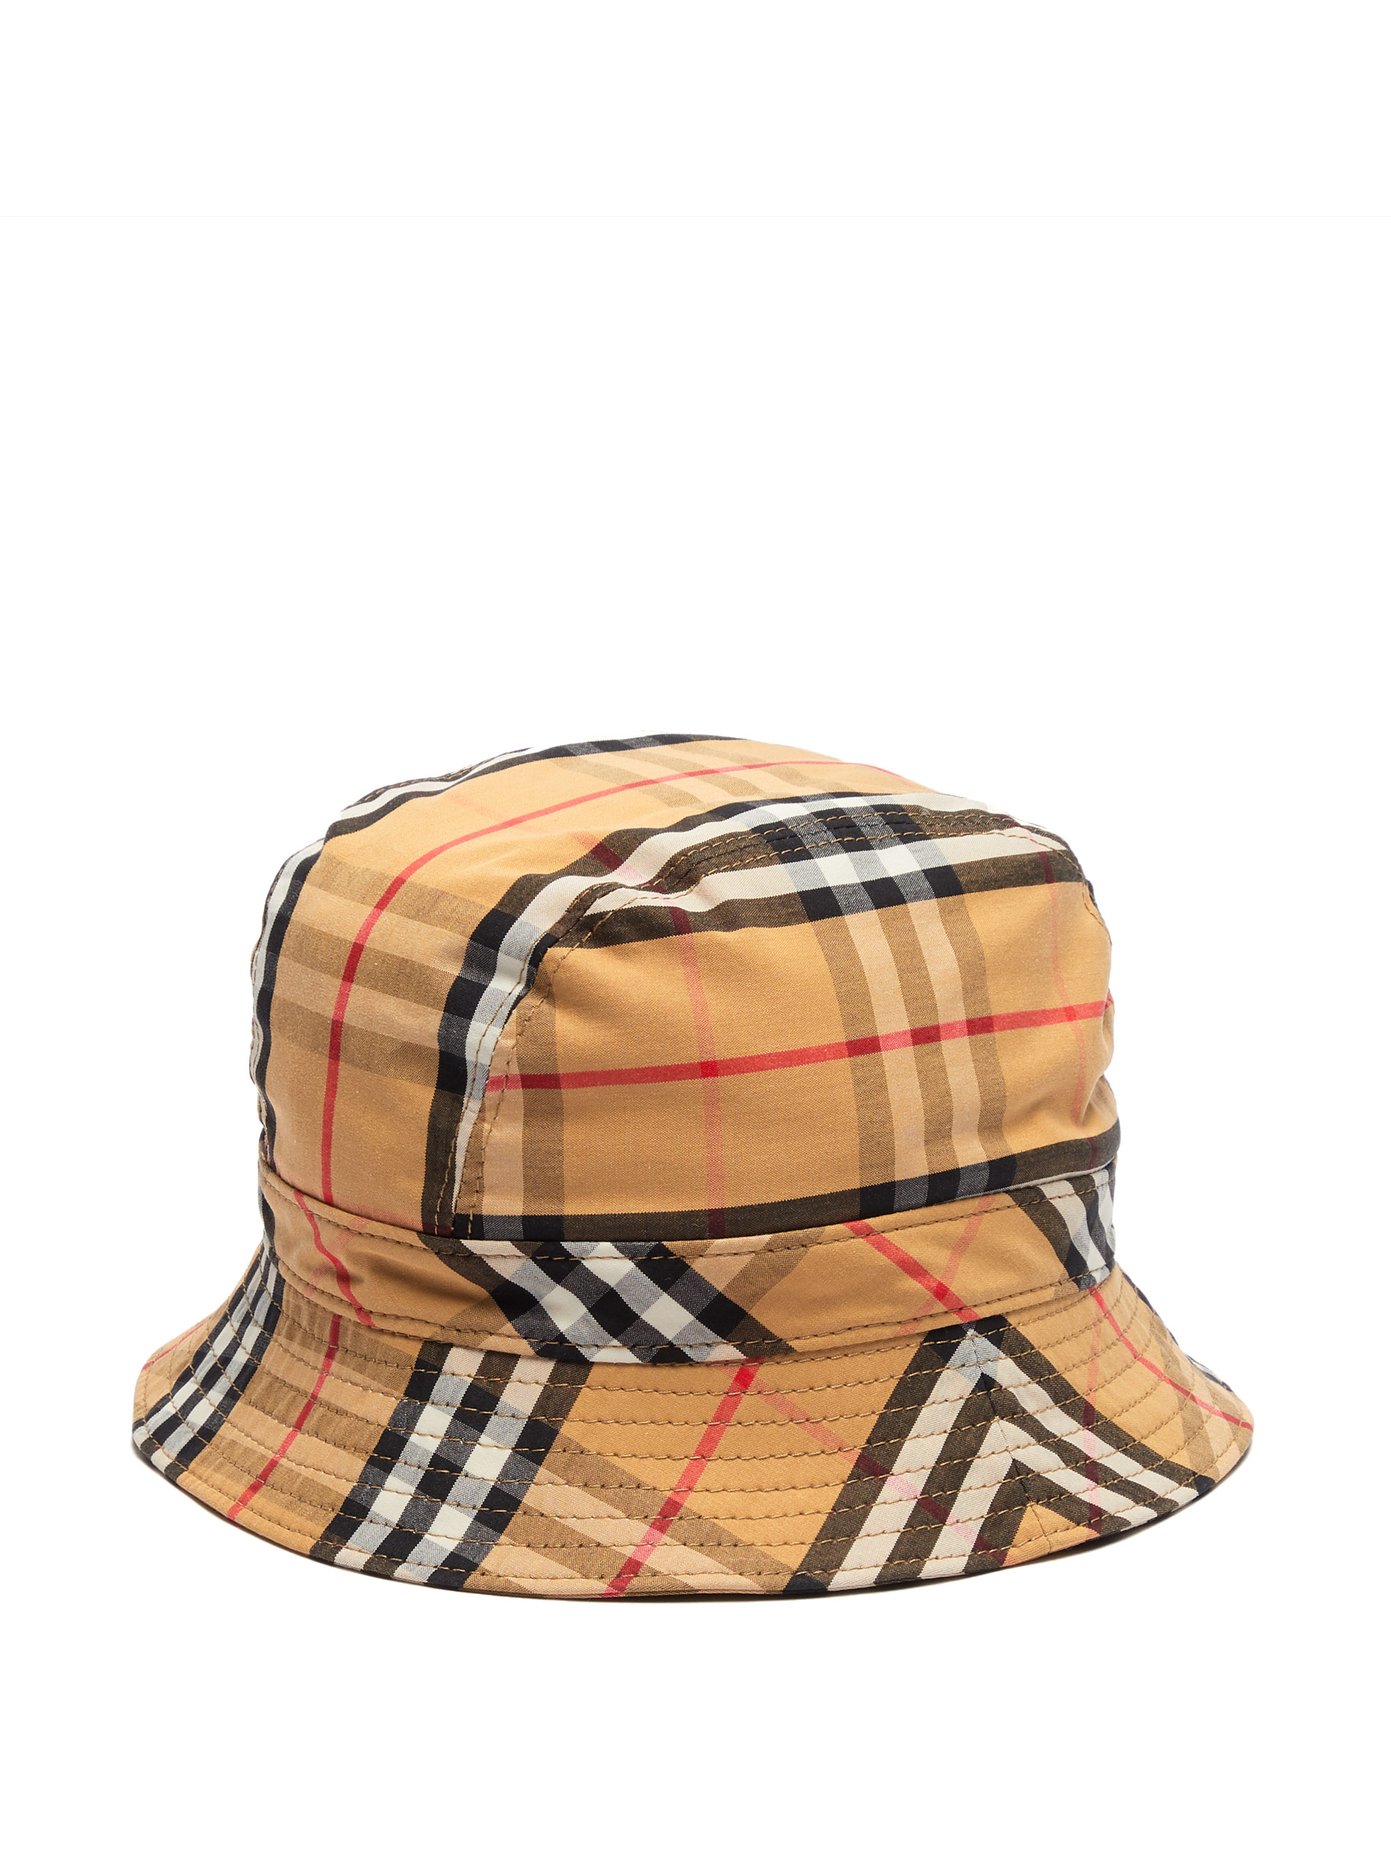 womens burberry hat